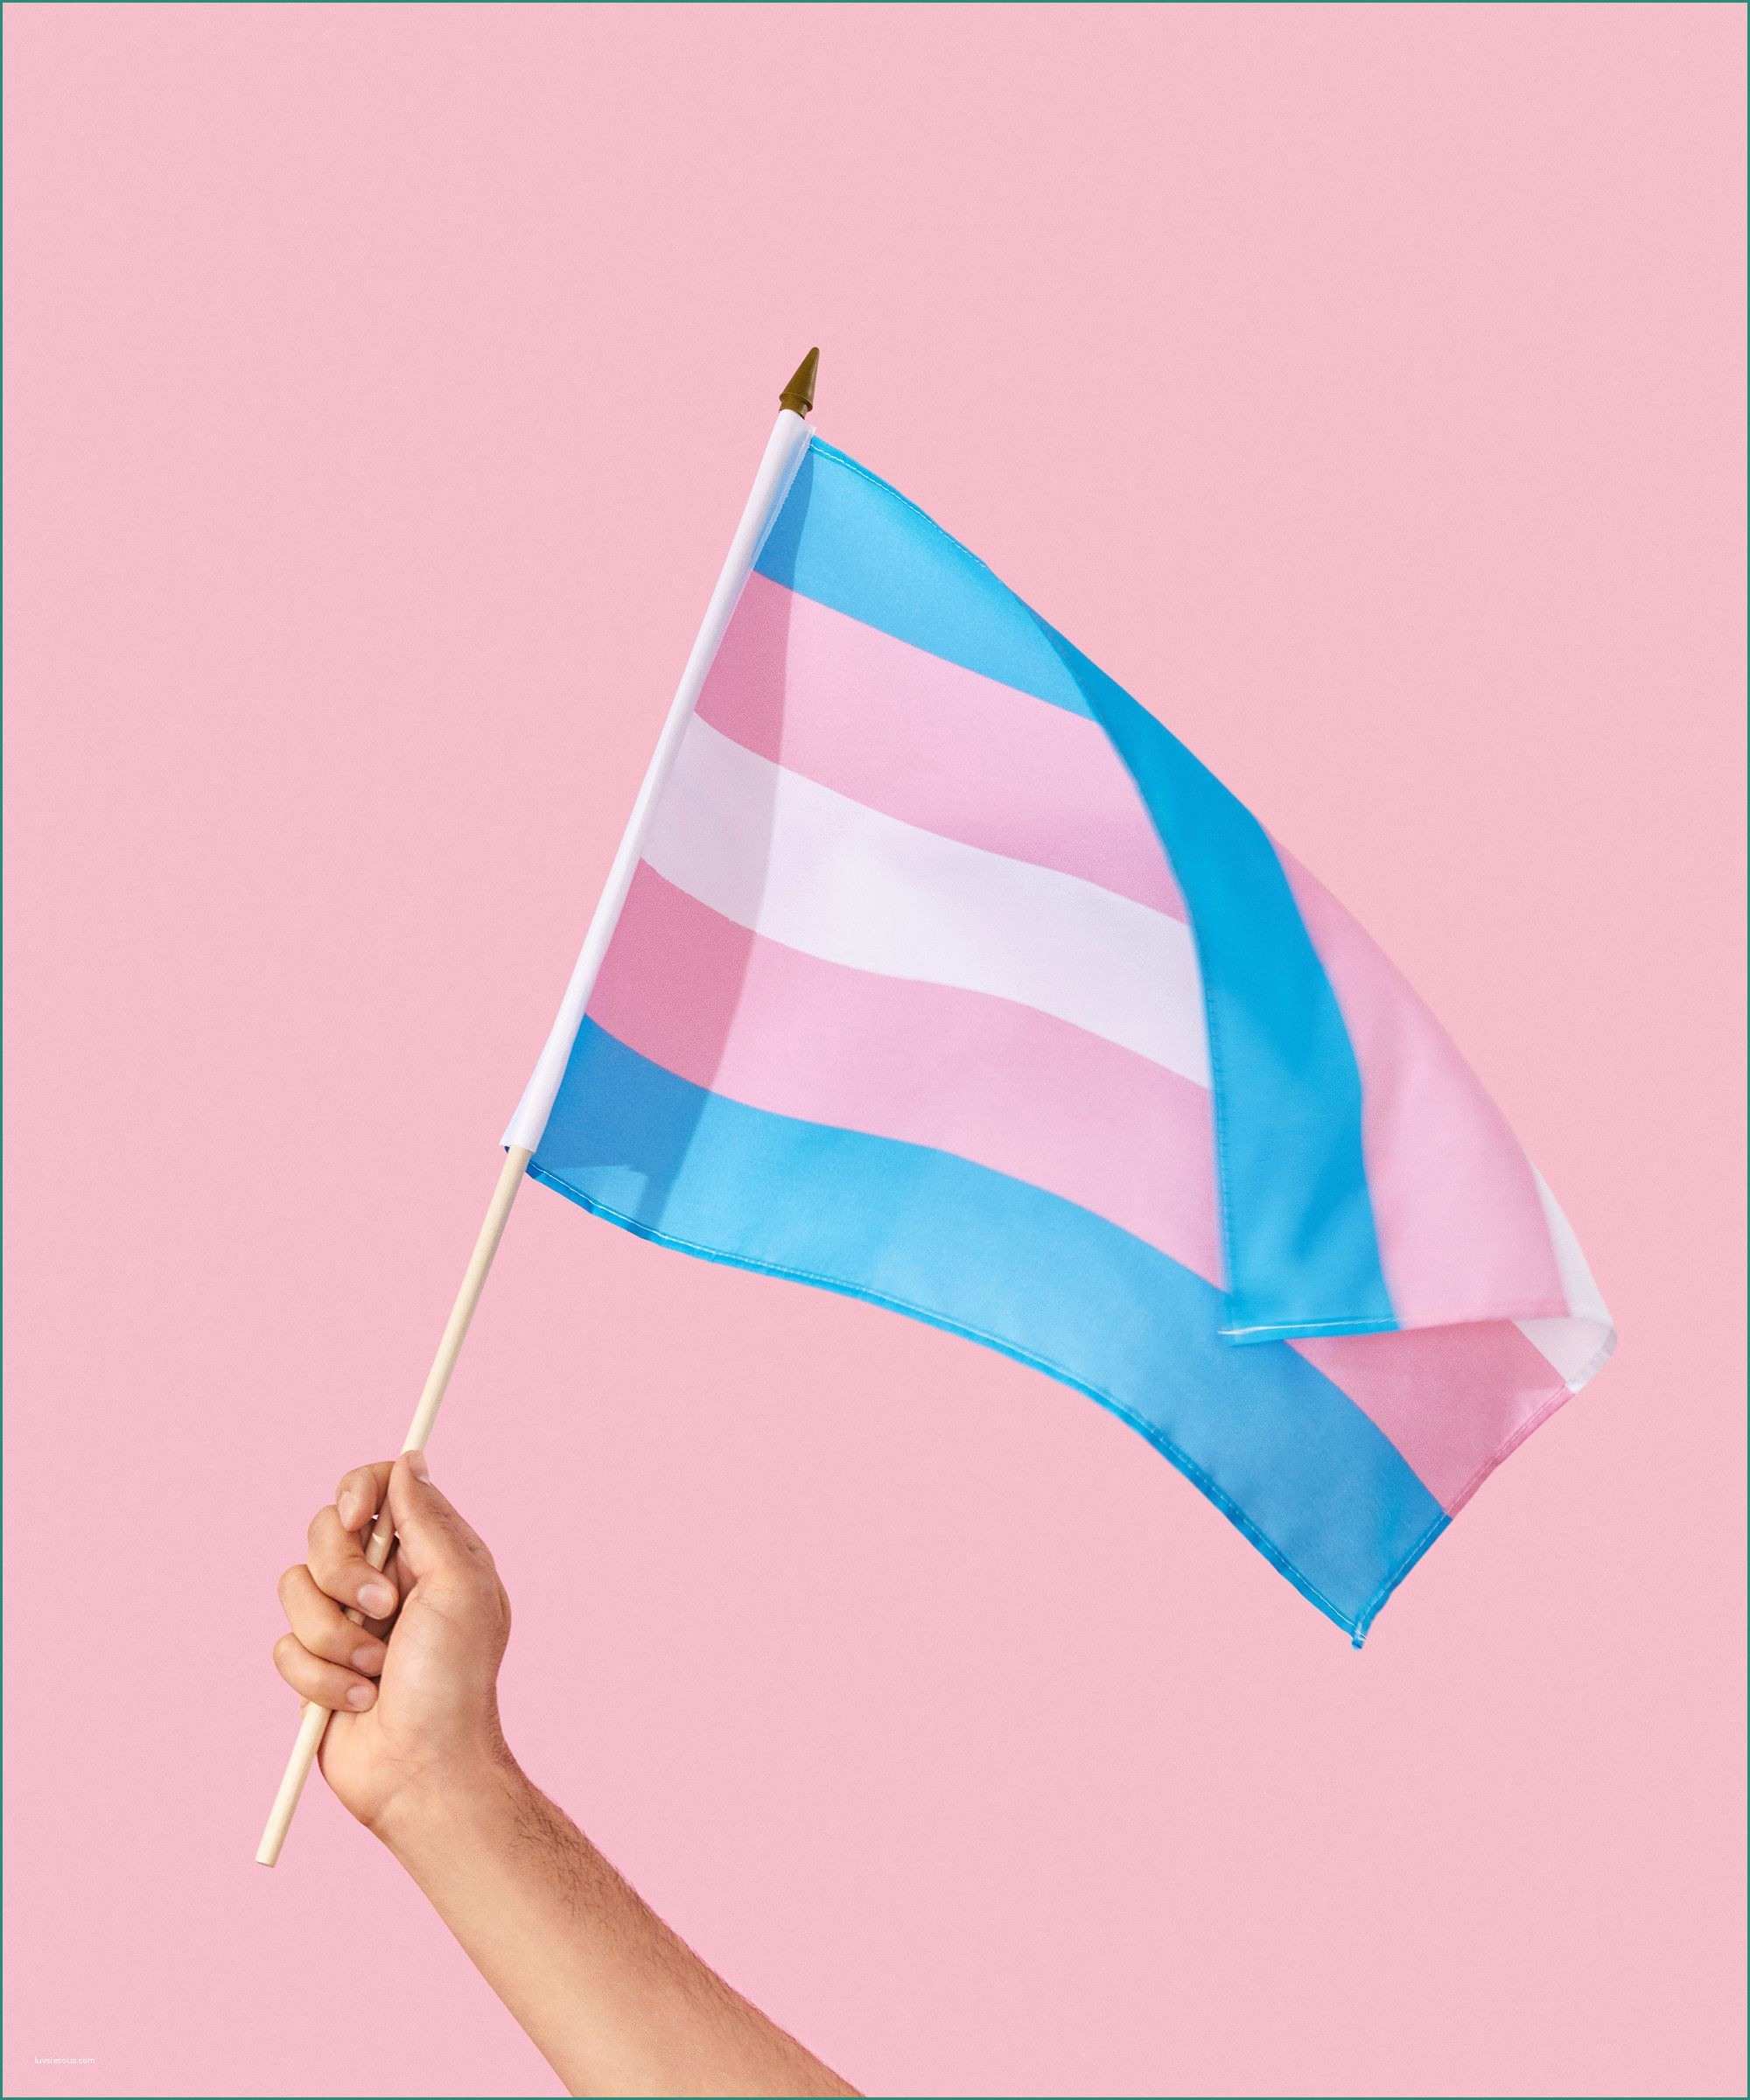 Lube Store Milano E Lgbtq Definitions Gender Identity Ual orientations